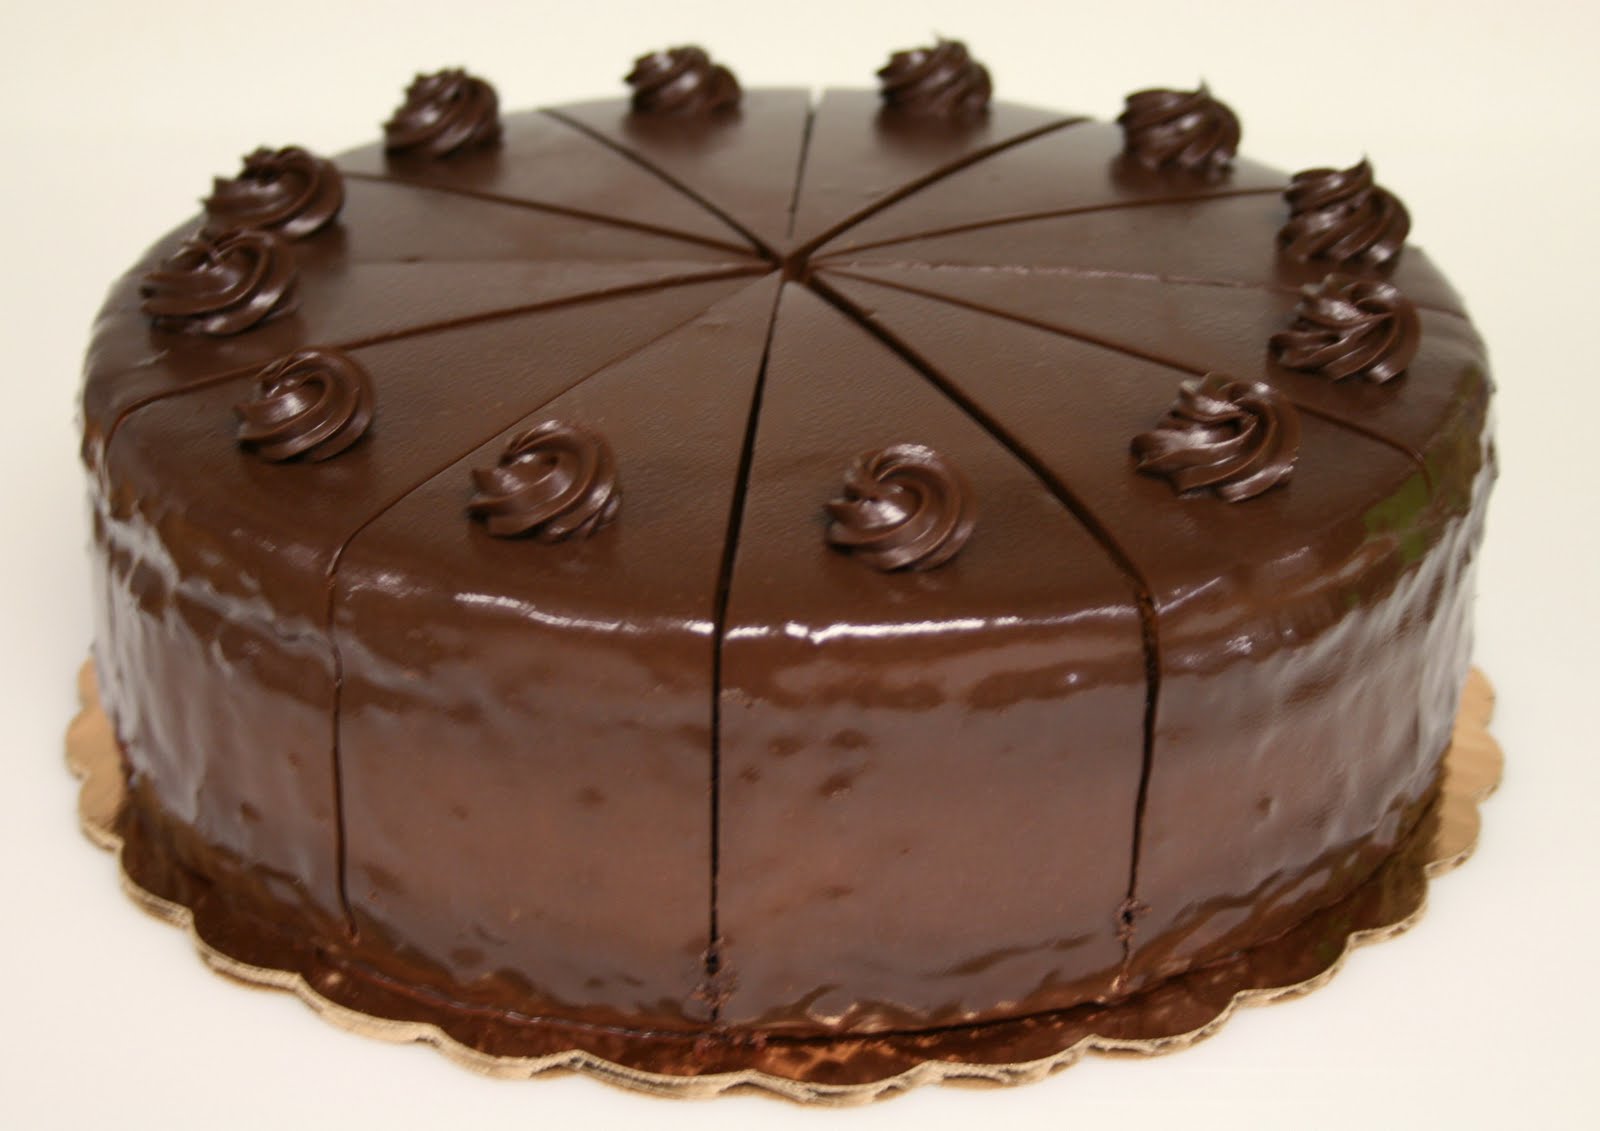 http://1.bp.blogspot.com/-AxeWqdkILao/TbievUR0isI/AAAAAAAAABY/nSTmsM9LzOc/s1600/Chocolate+Mousse+Cake+1.jpg